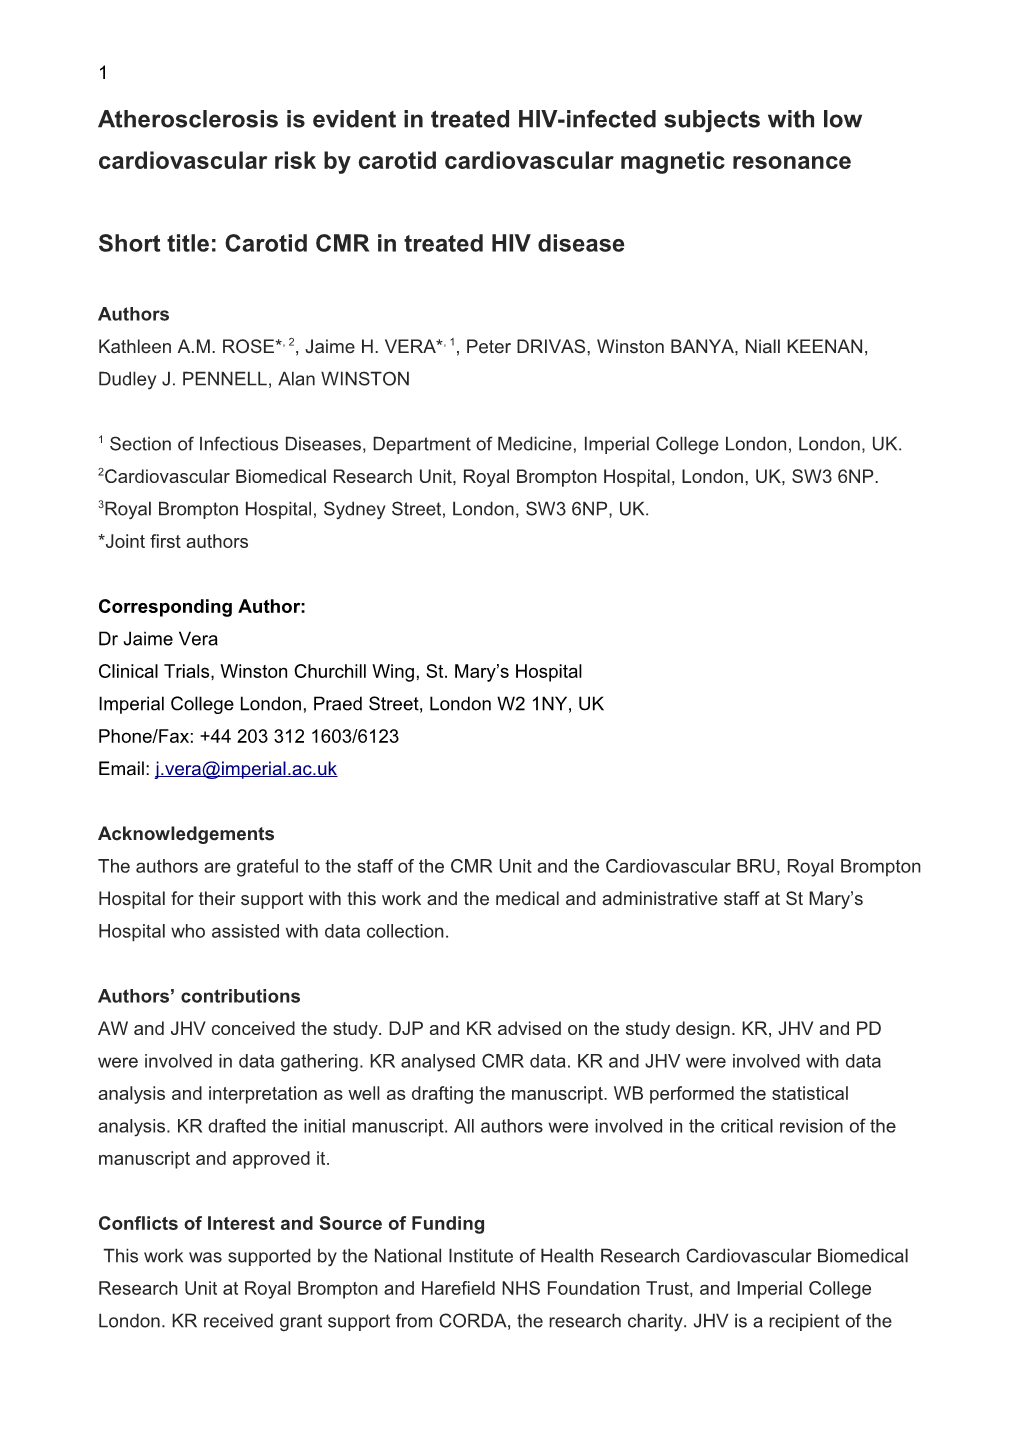 Short Title: Carotid CMR in Treated HIV Disease